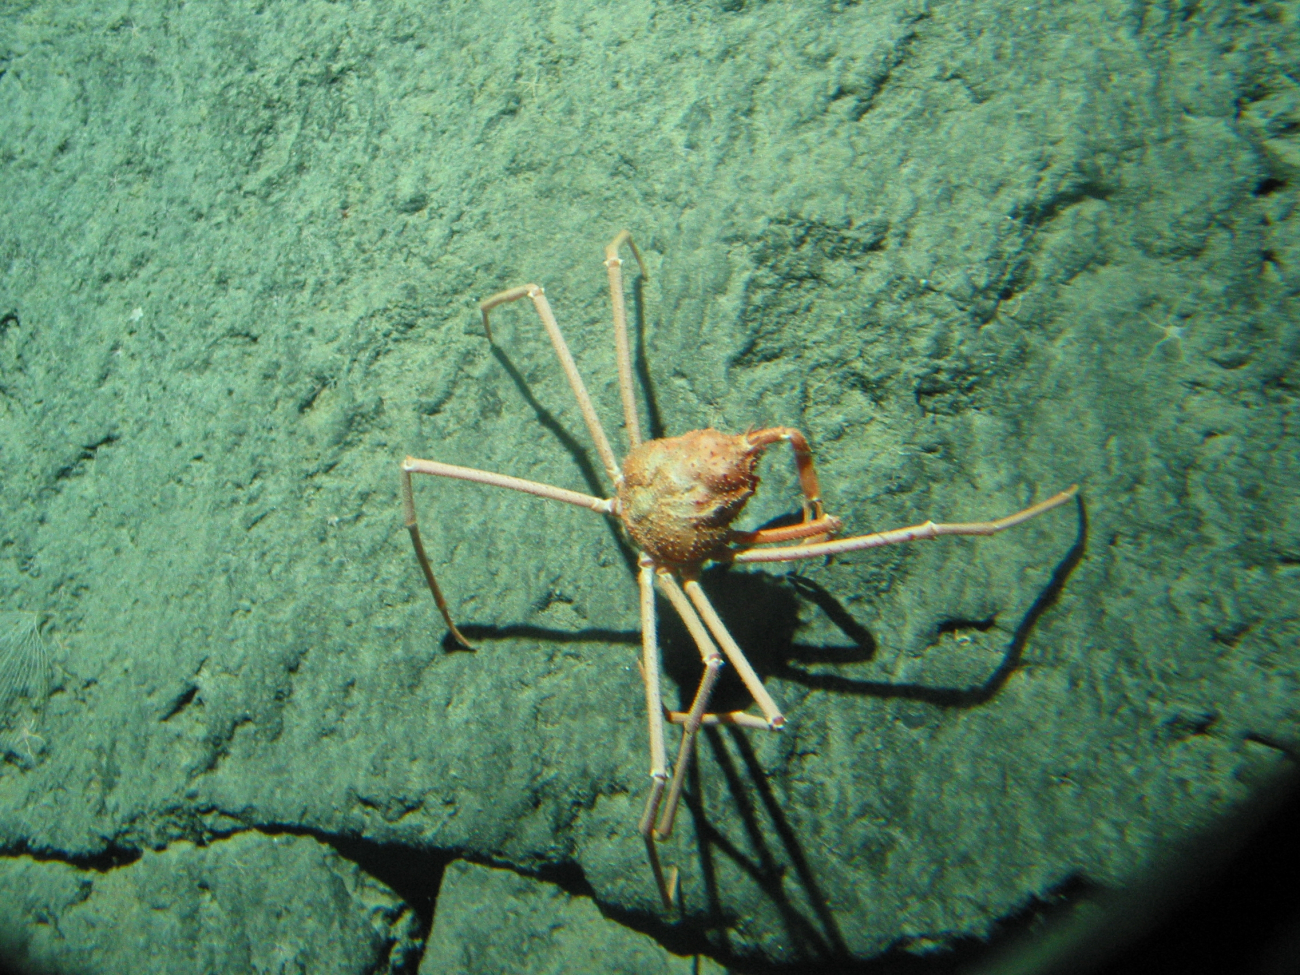 Large spider crab on a basalt rock surface